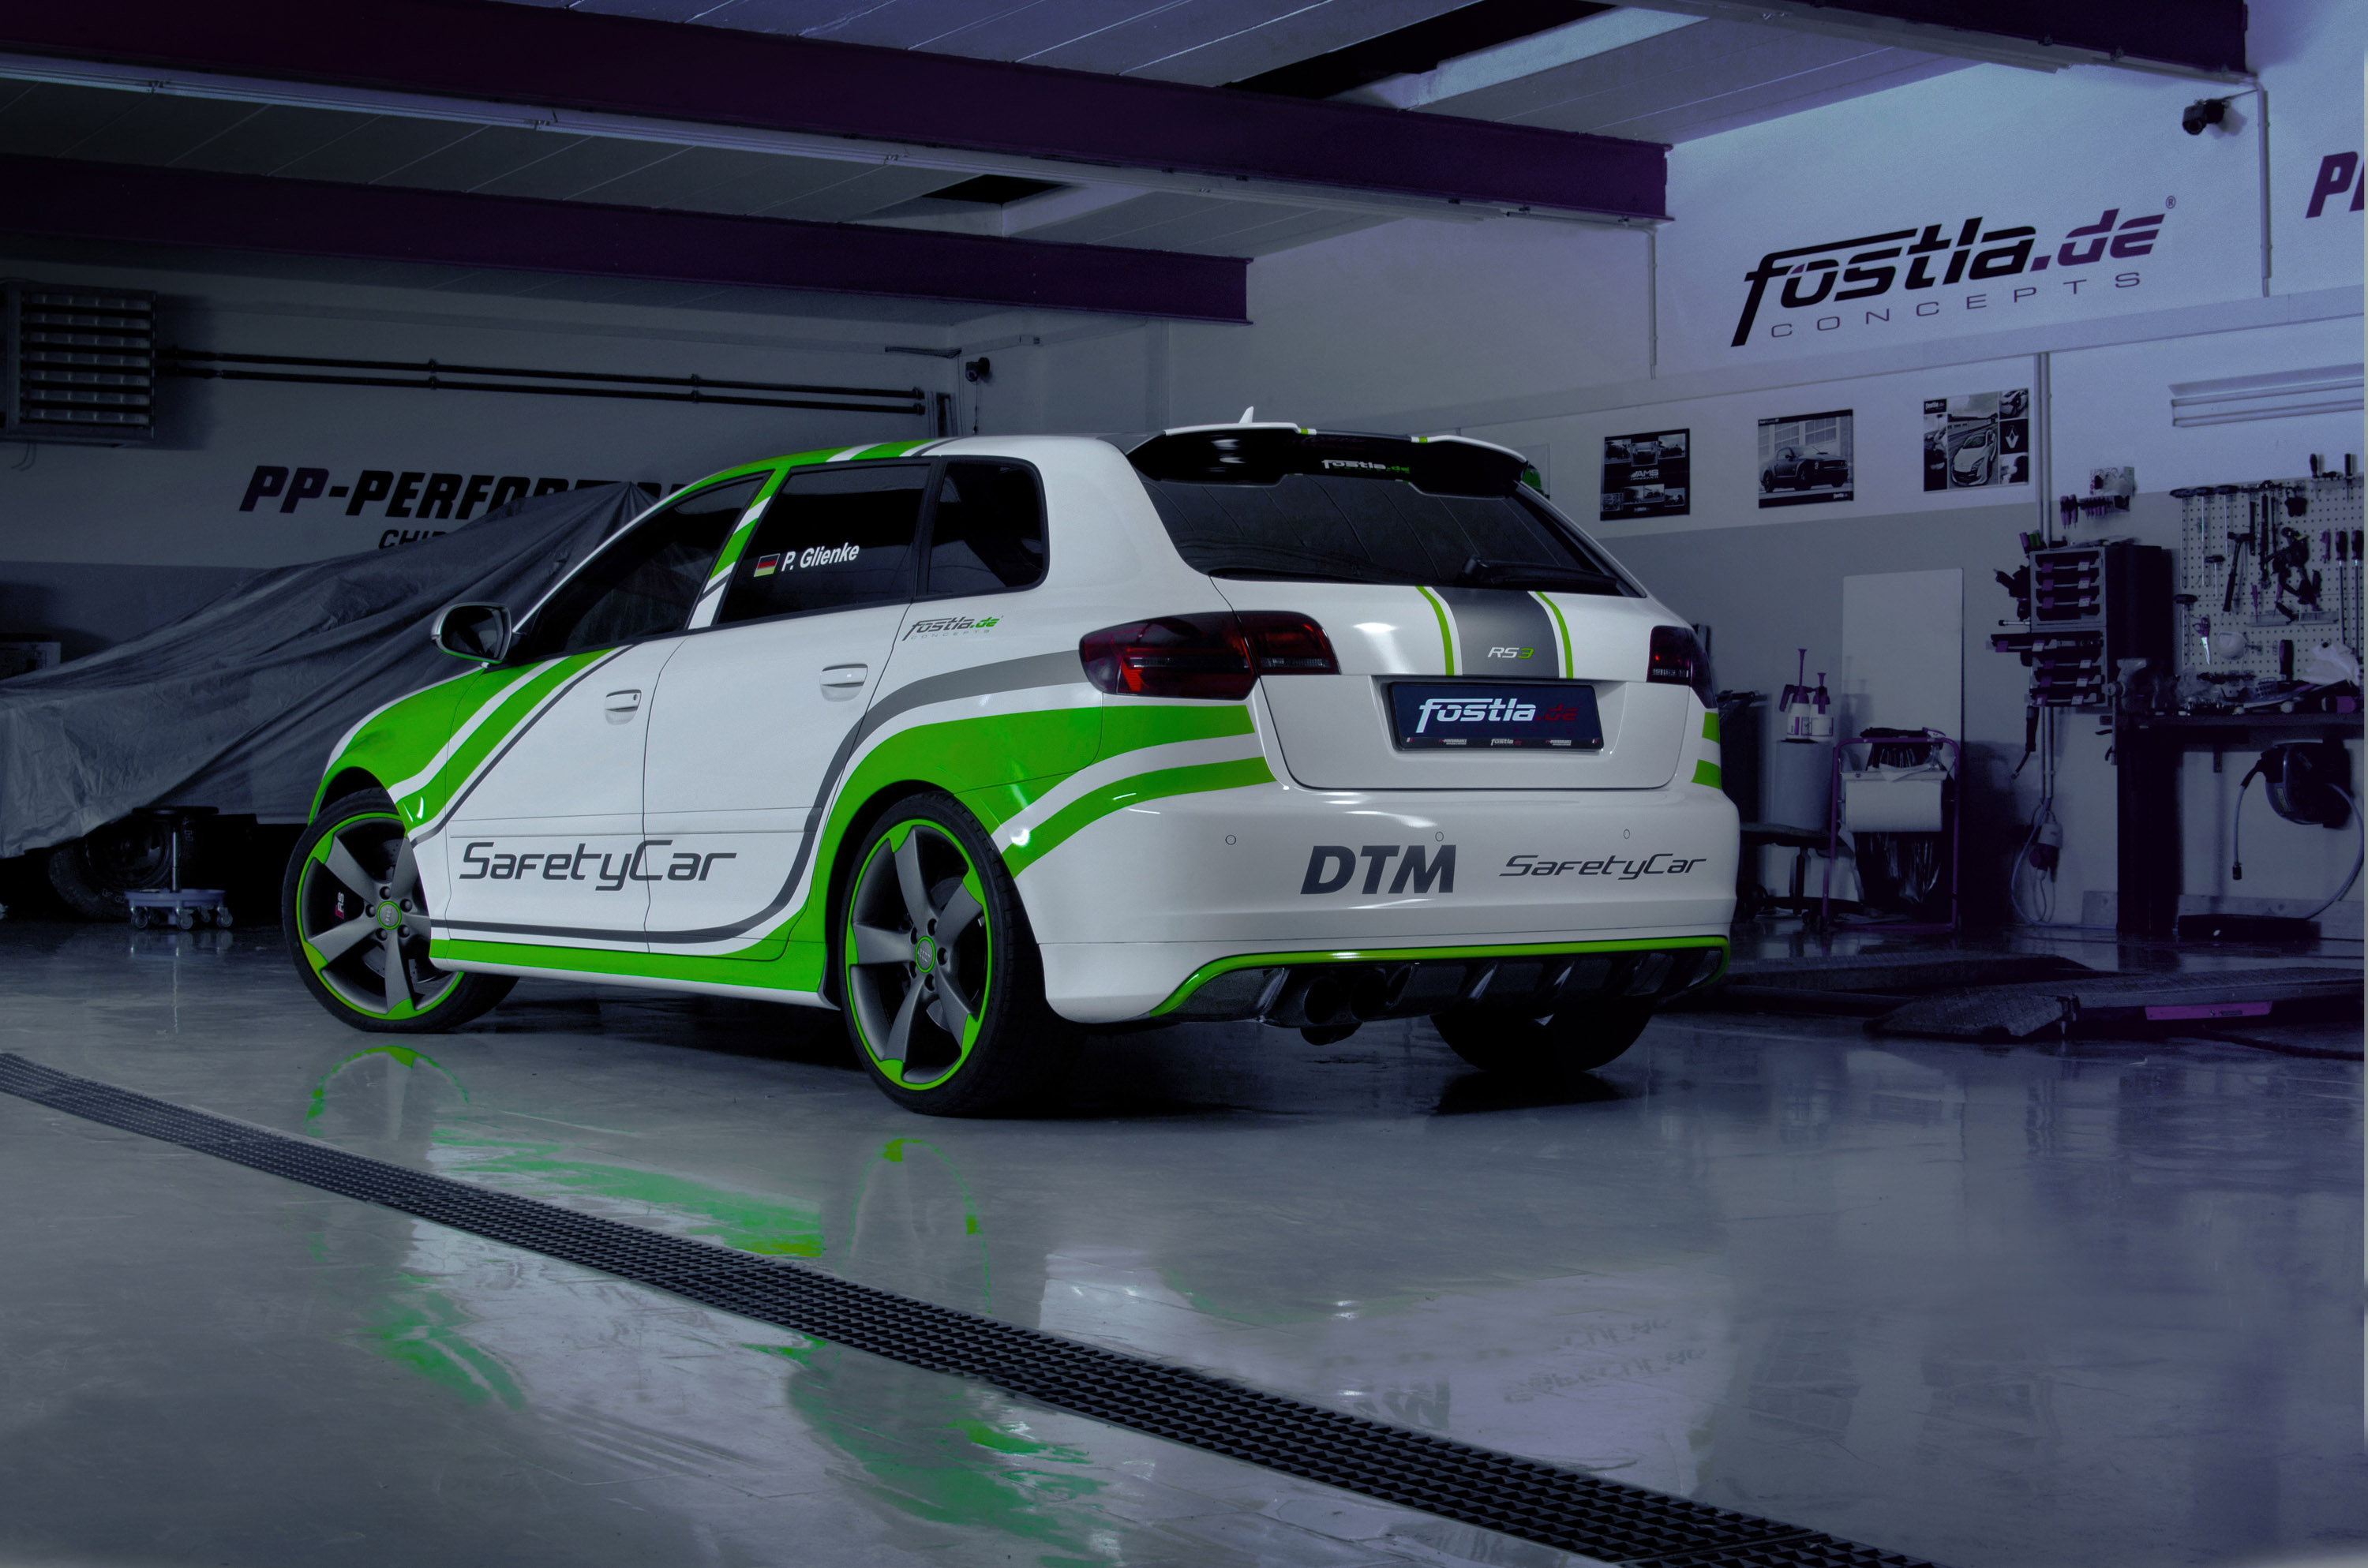 Audi RS3 Safety Car by Fostla.de